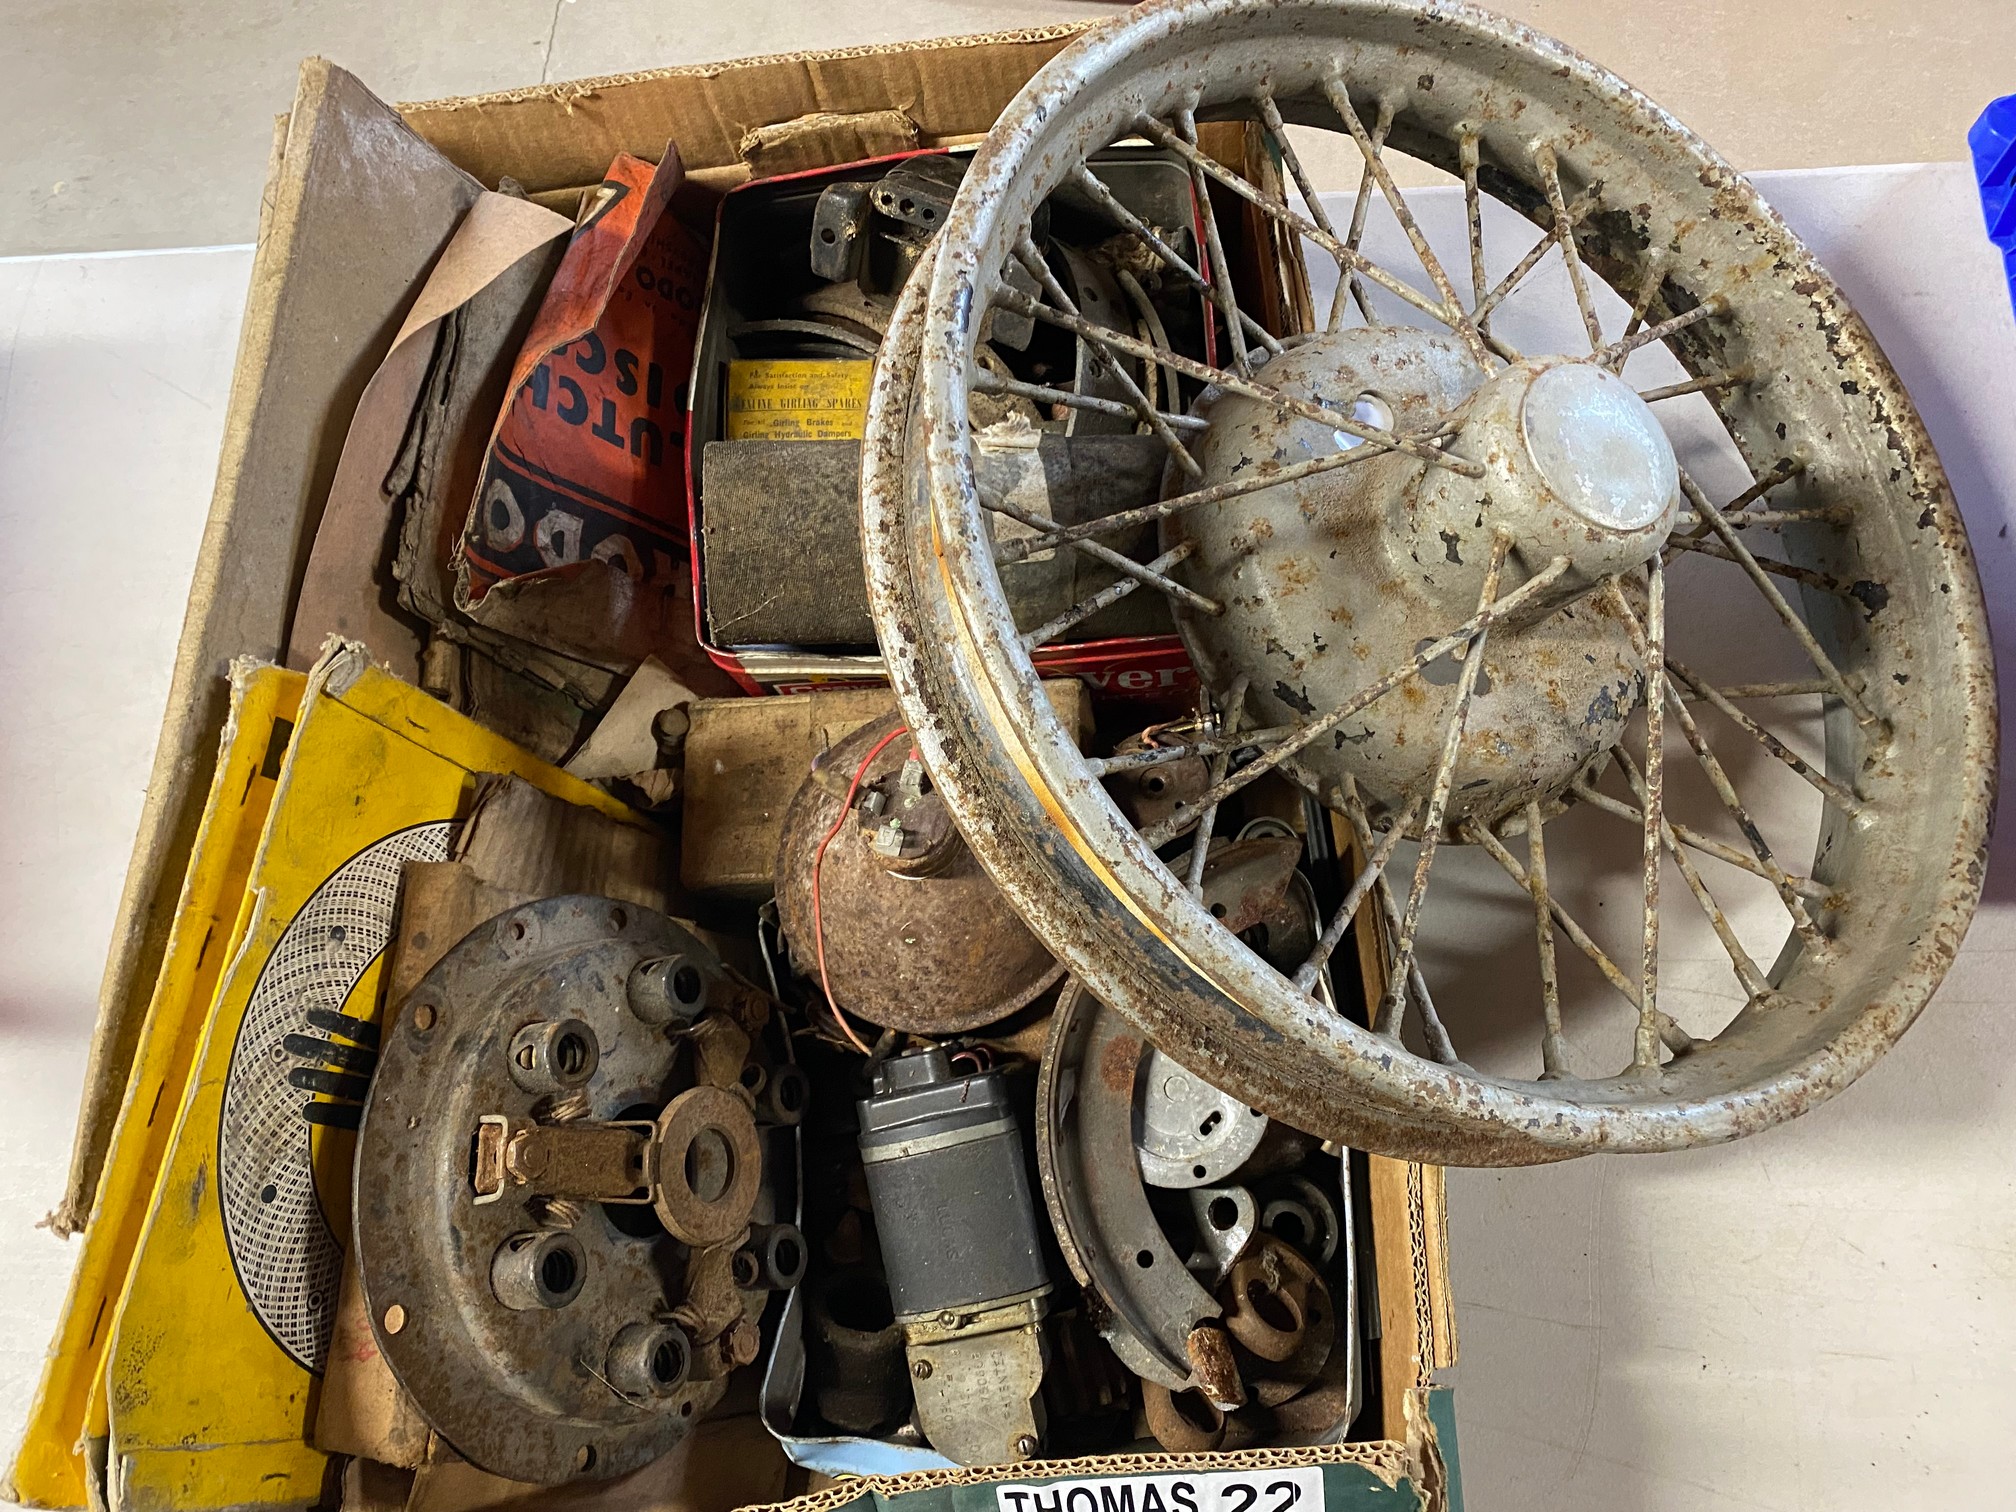 A box of Austin parts plus an Austin 7 wheel.